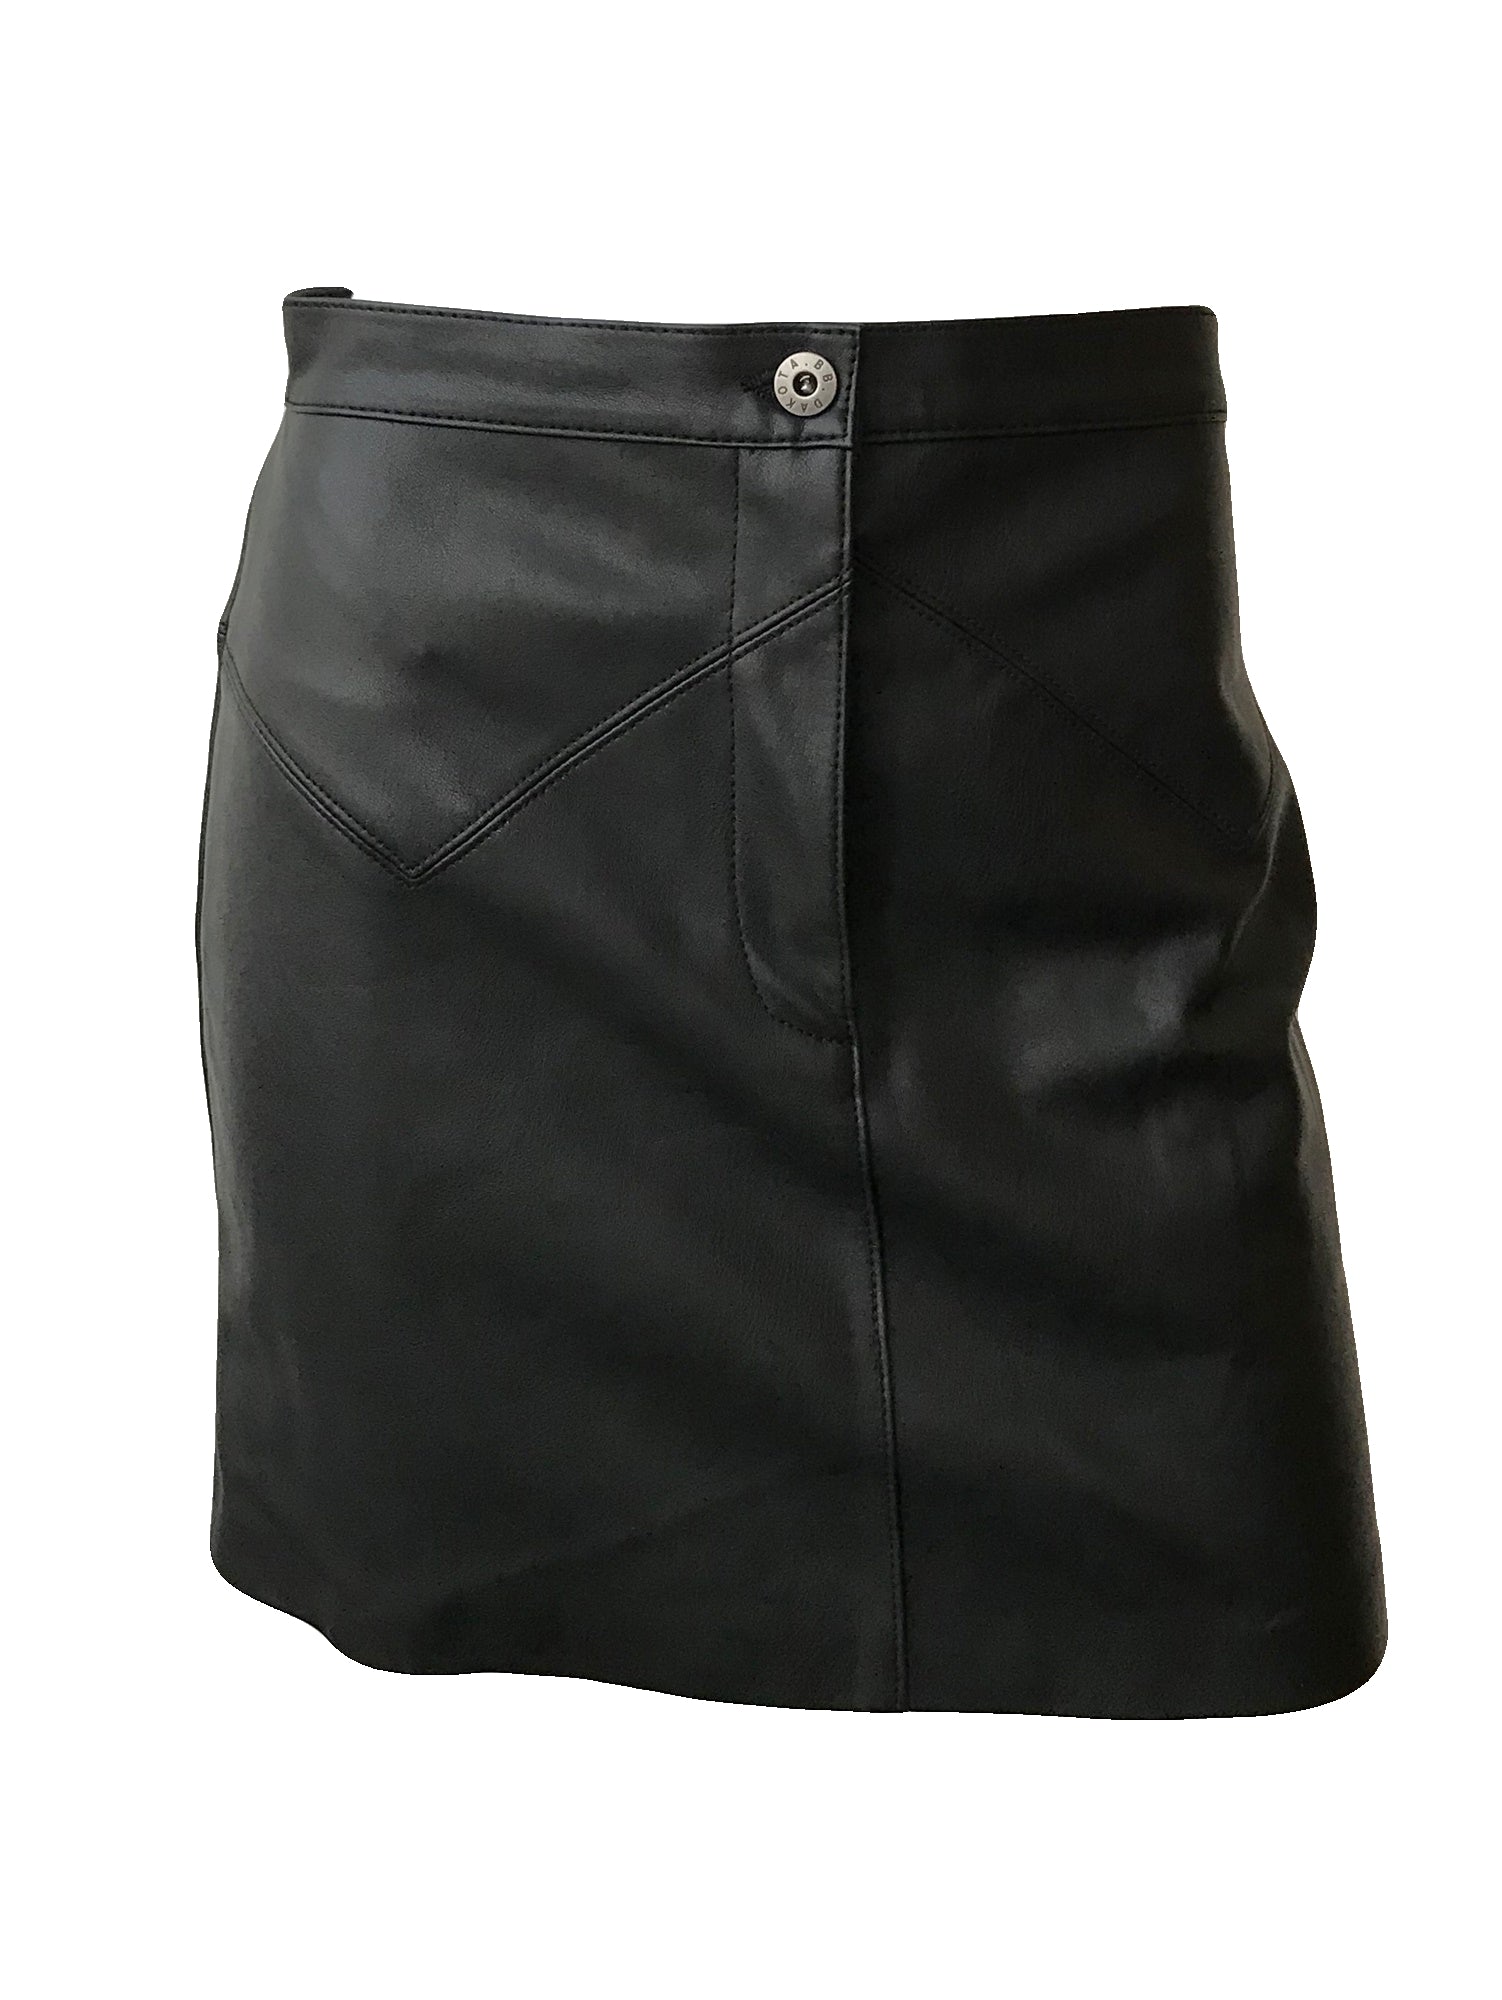 Keep Livin Vegan Leather Skirt Size 4 NWT